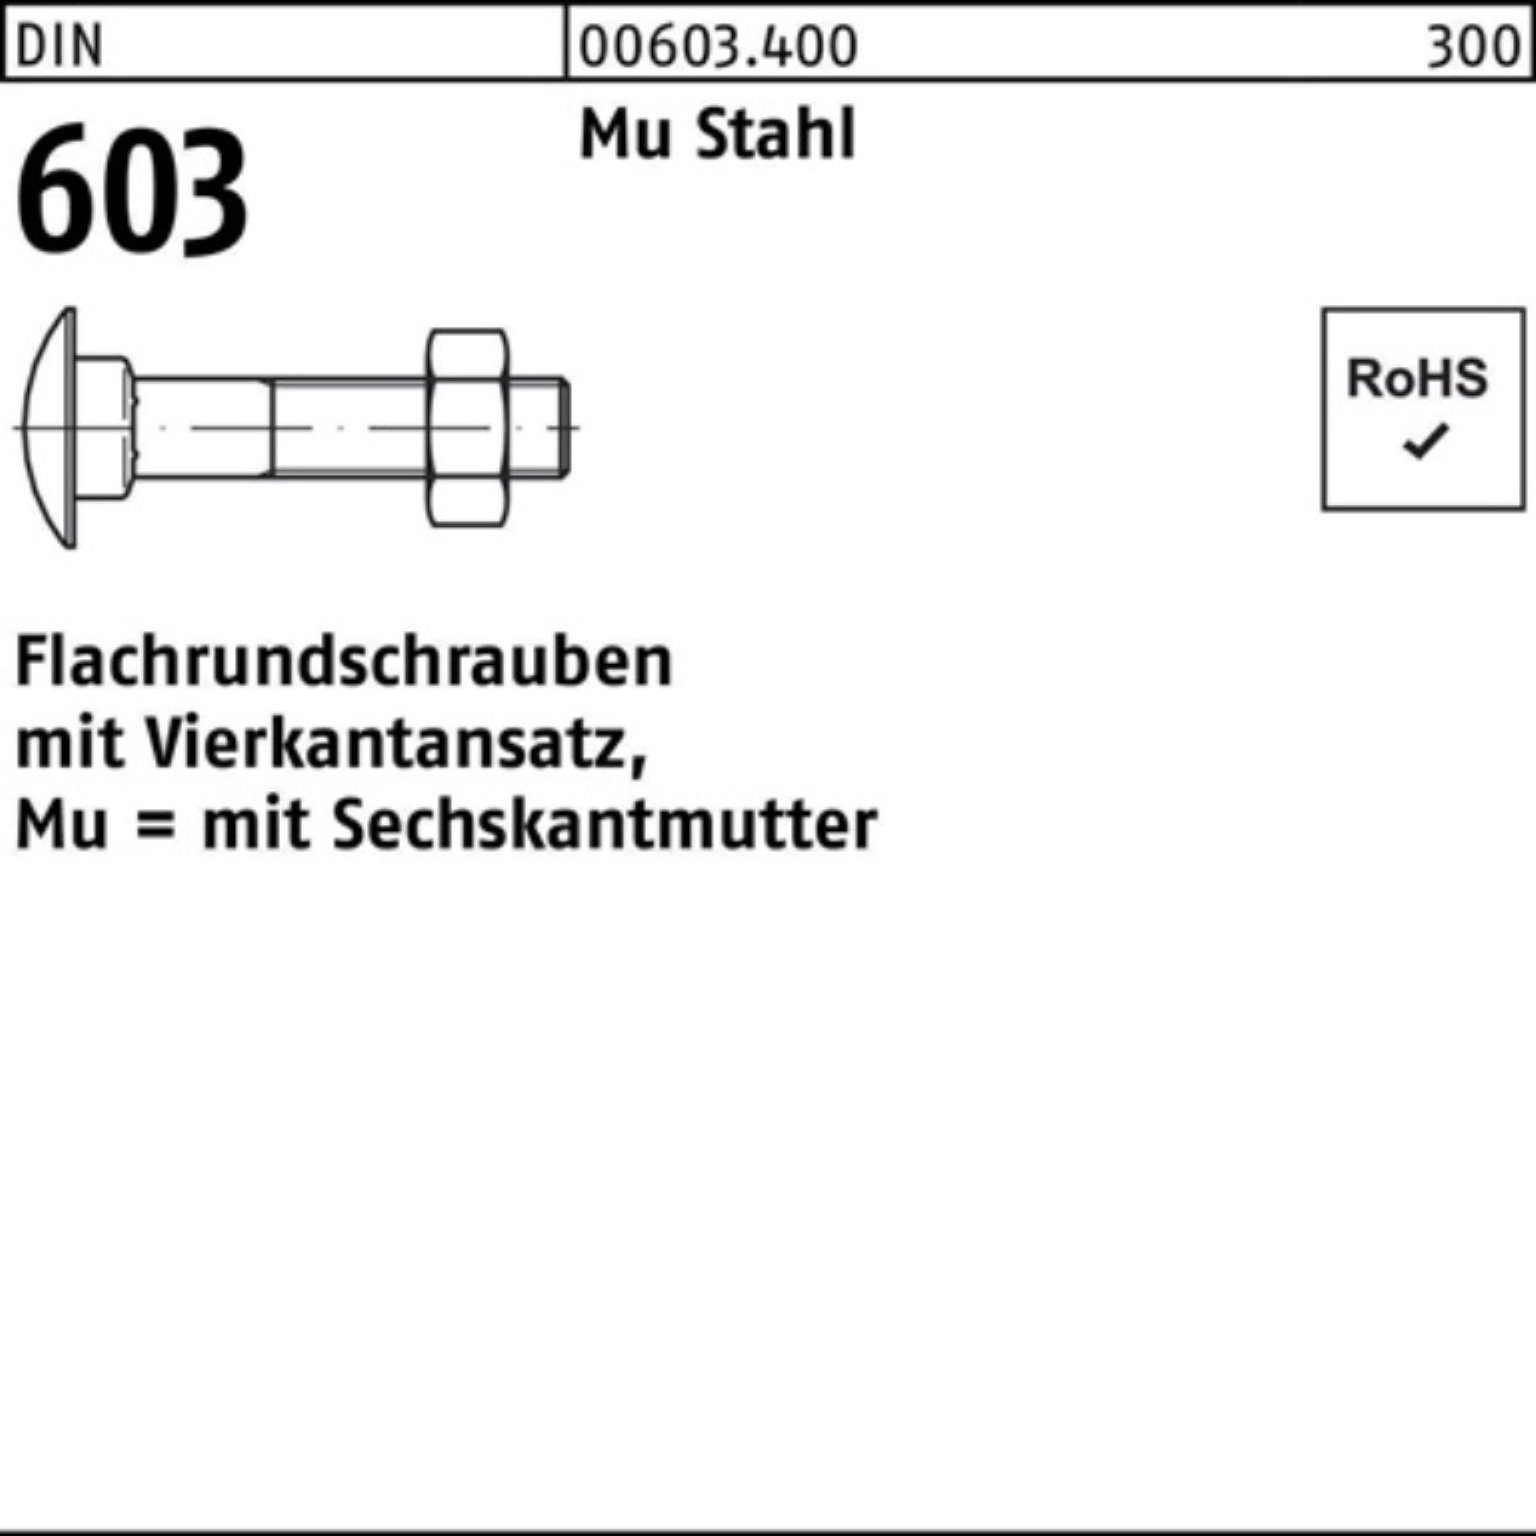 Reyher 100er Vierkantansatz/6-ktmutter 603 Schraube Flachrundschraube Pack DIN M16x320